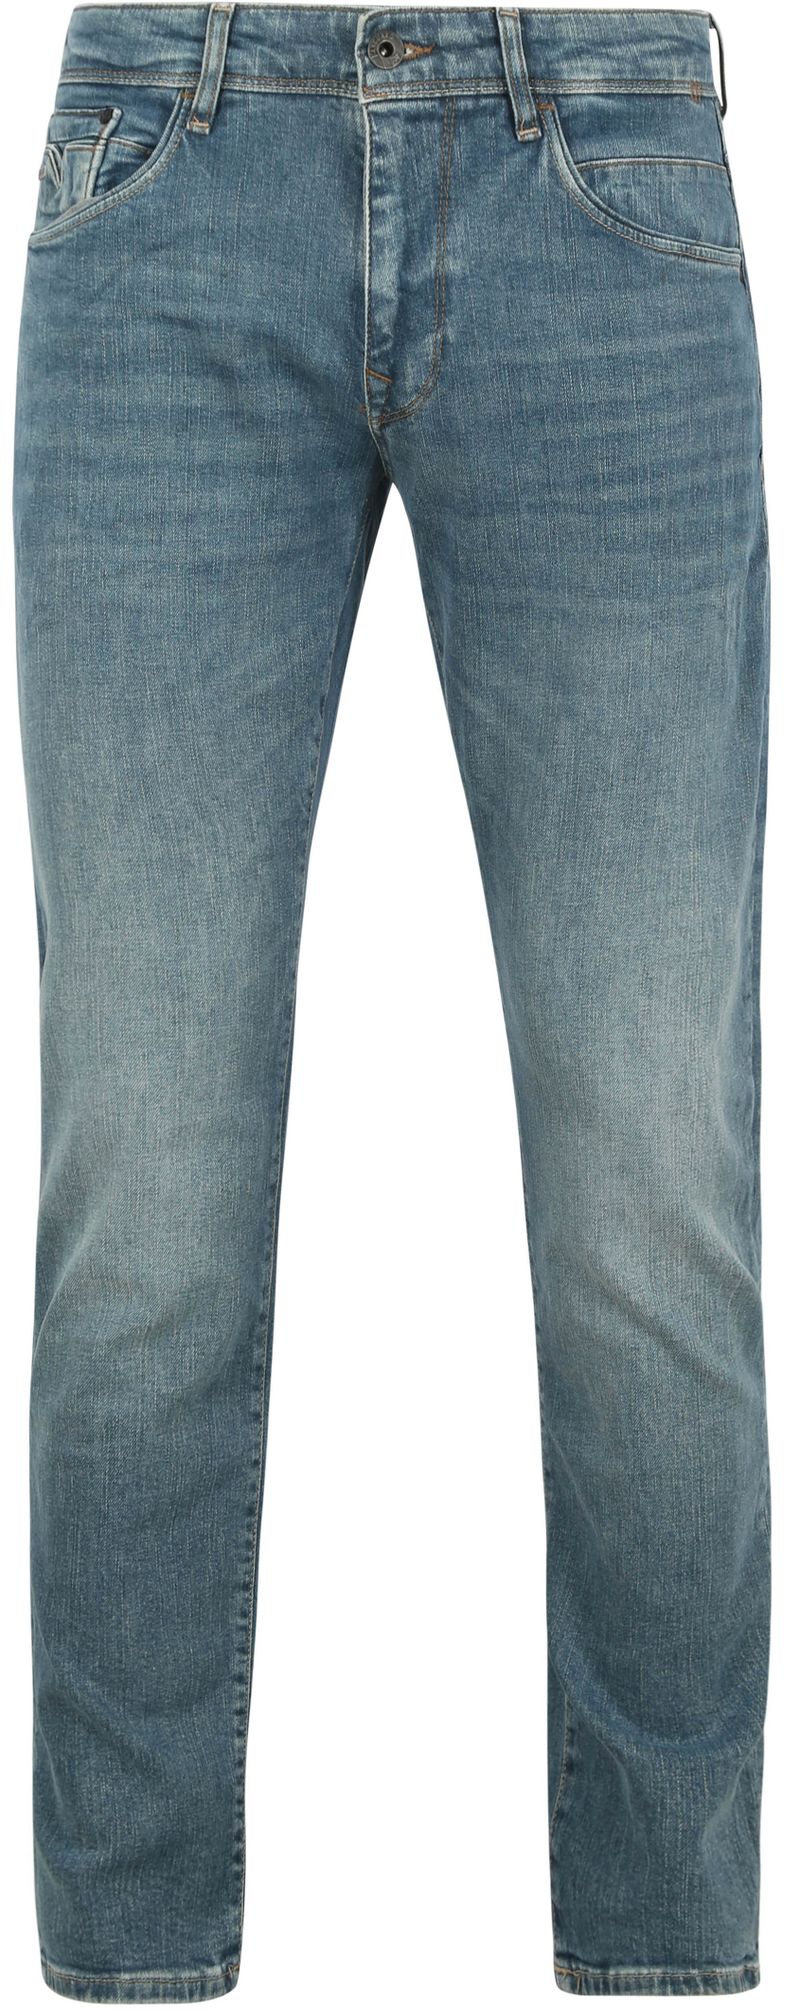 Vanguard slim fit jeans V12 Rider fresh green denim